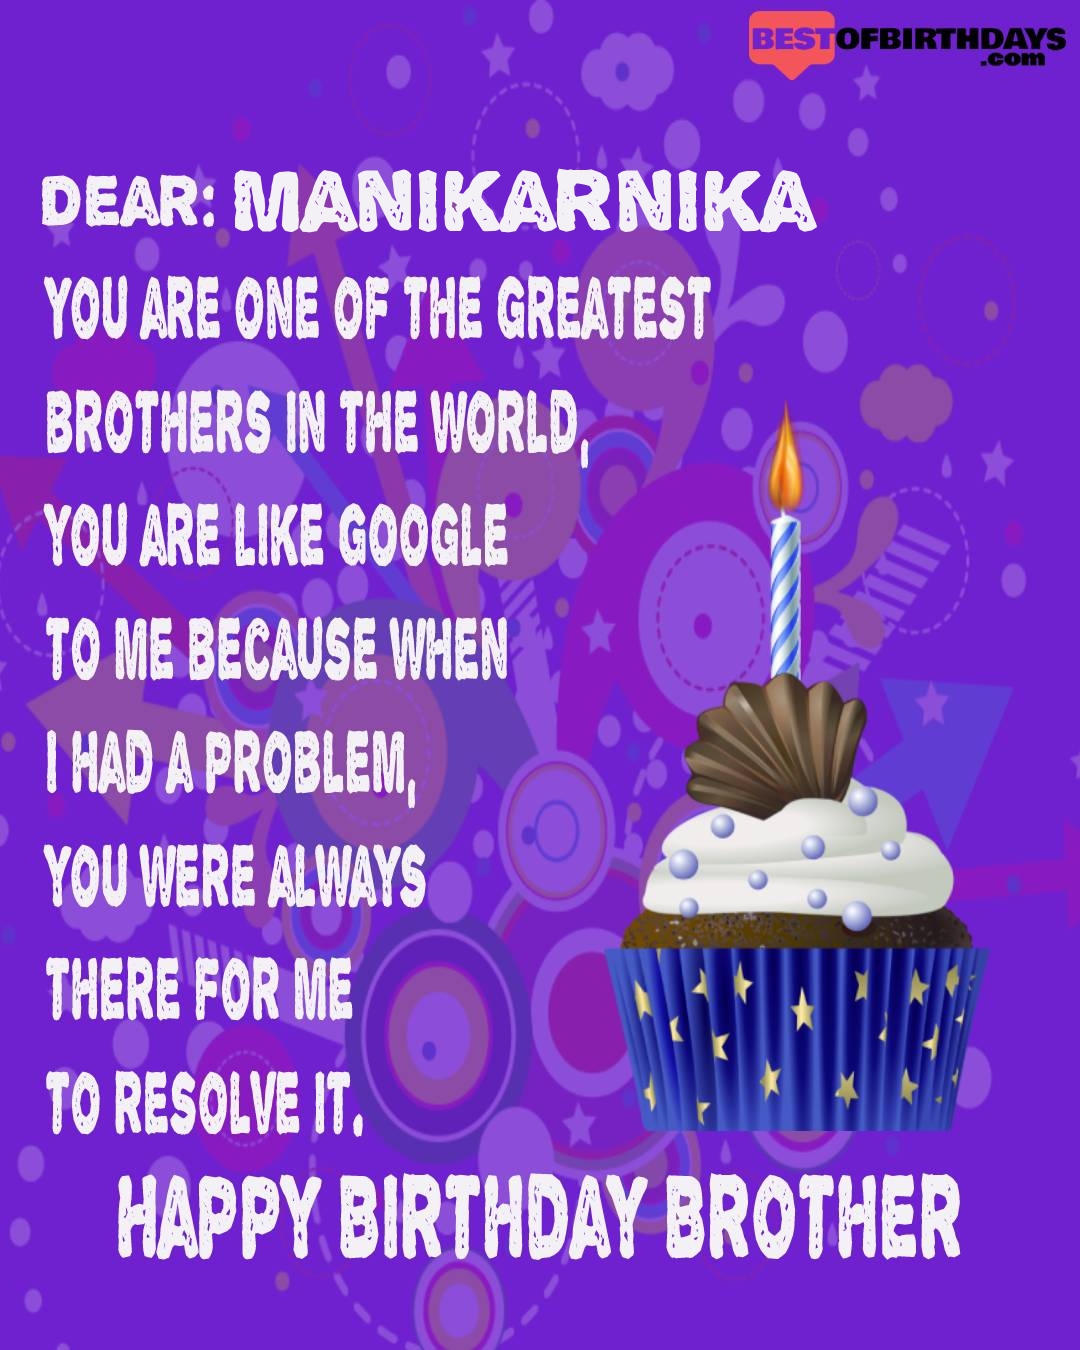 Happy birthday manikarnika bhai brother bro